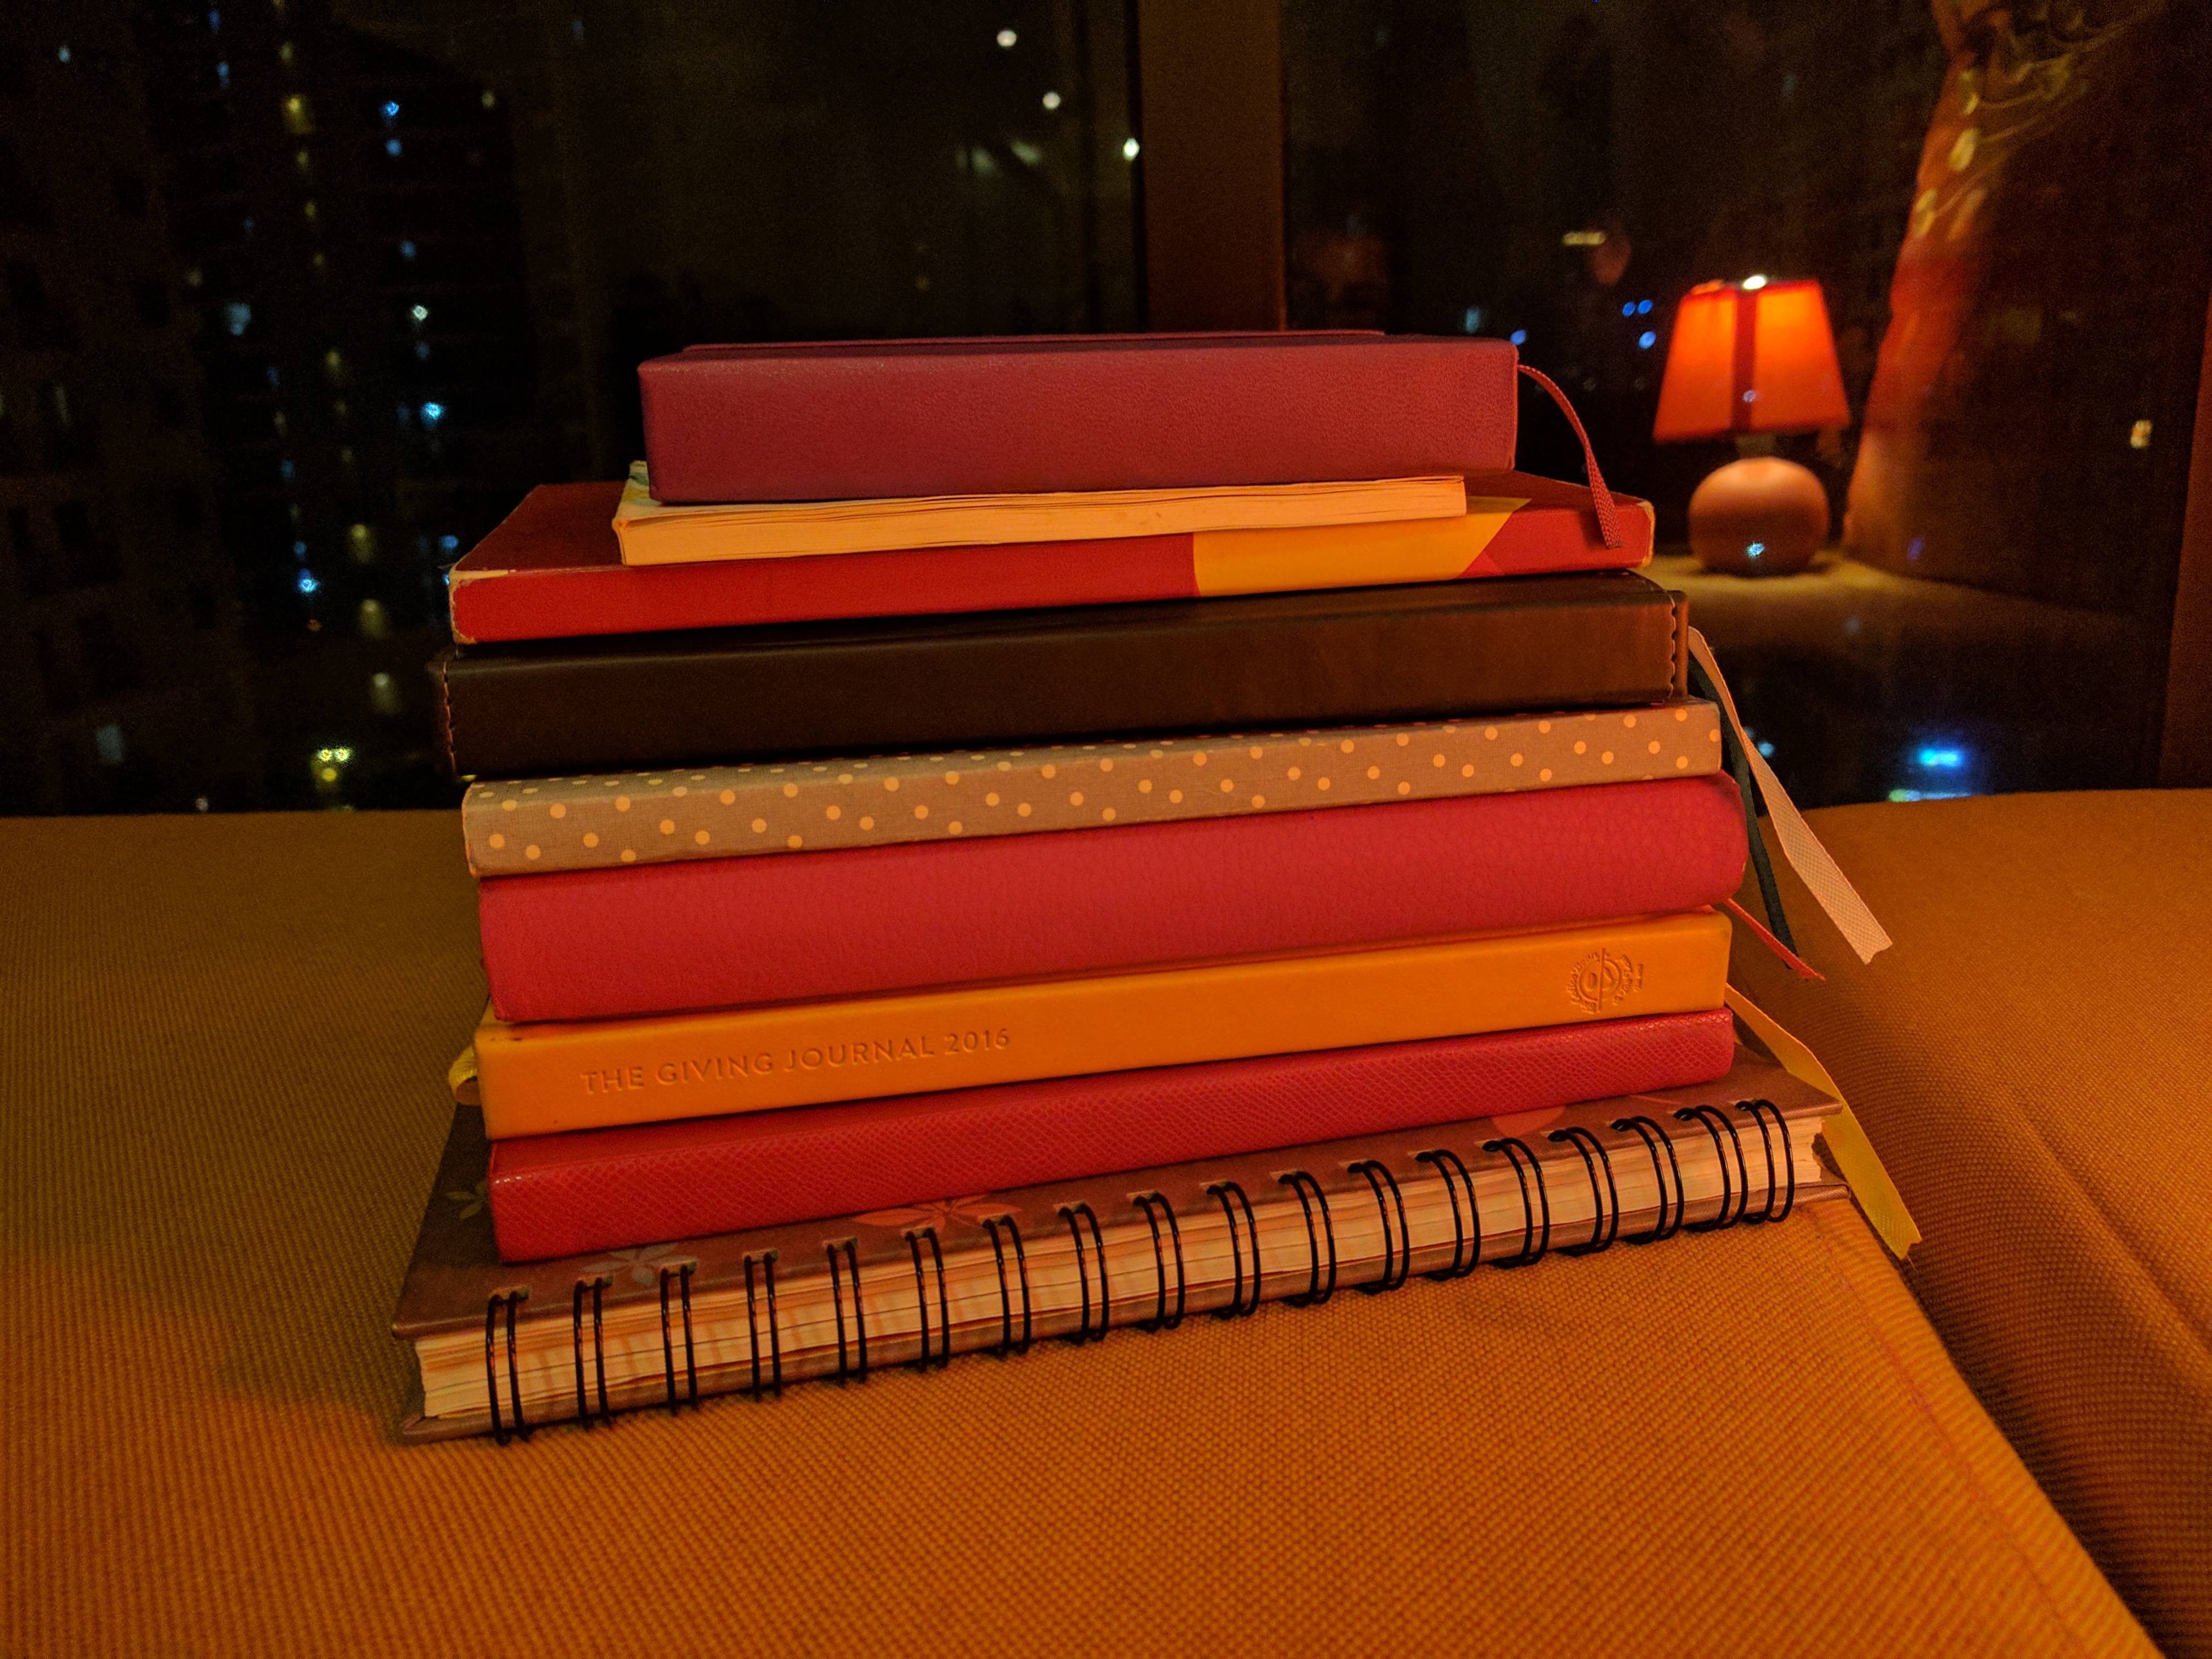 notebooks2